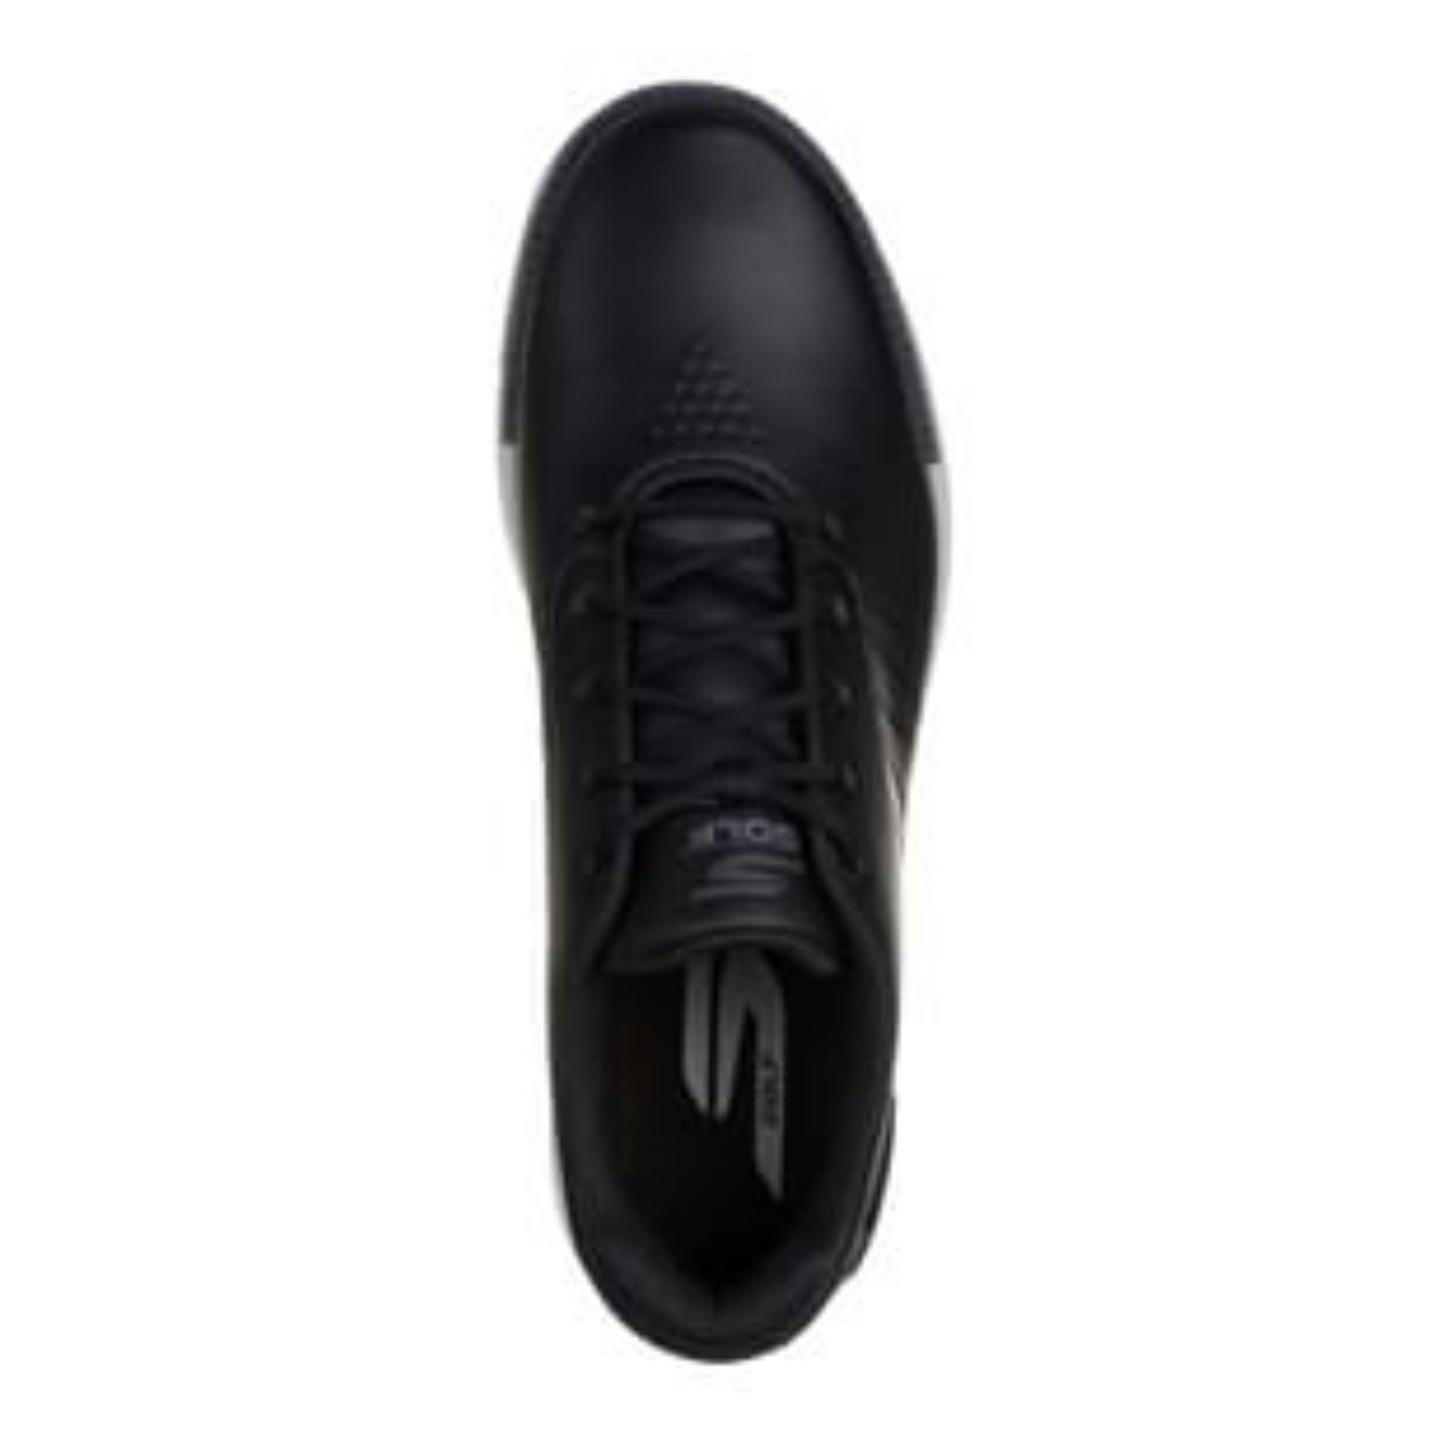 Skechers Go Golf Tempo GF Spikeless Golf Shoes 214099 - Black   